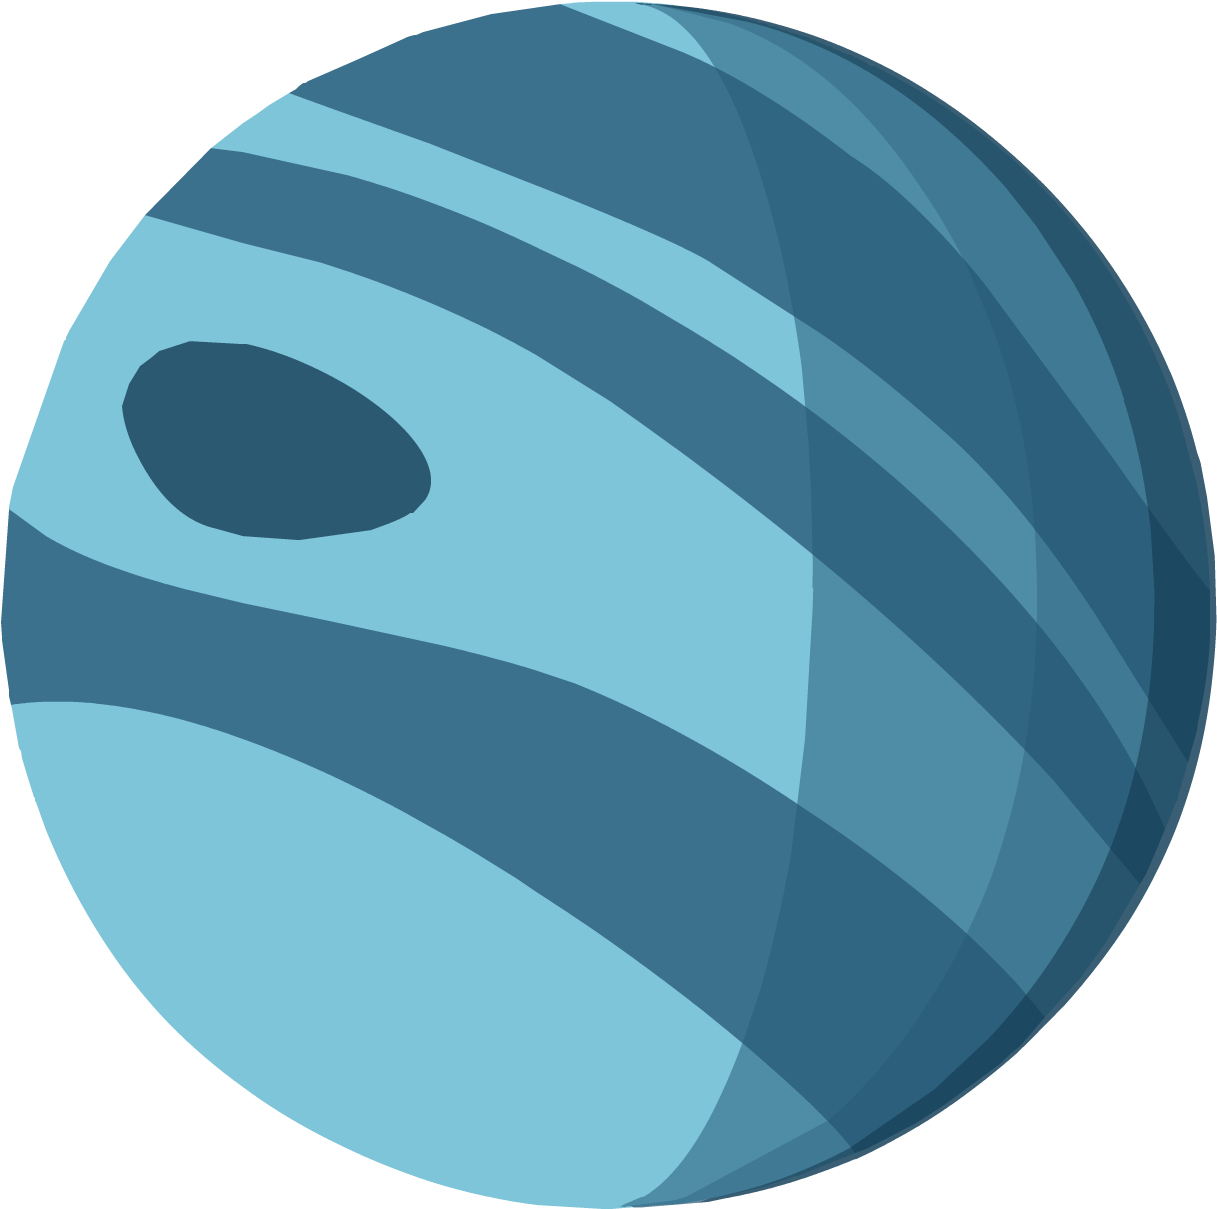 Planet Solar System Clip Art - Cartoon Neptune Planet, Find more high quali...